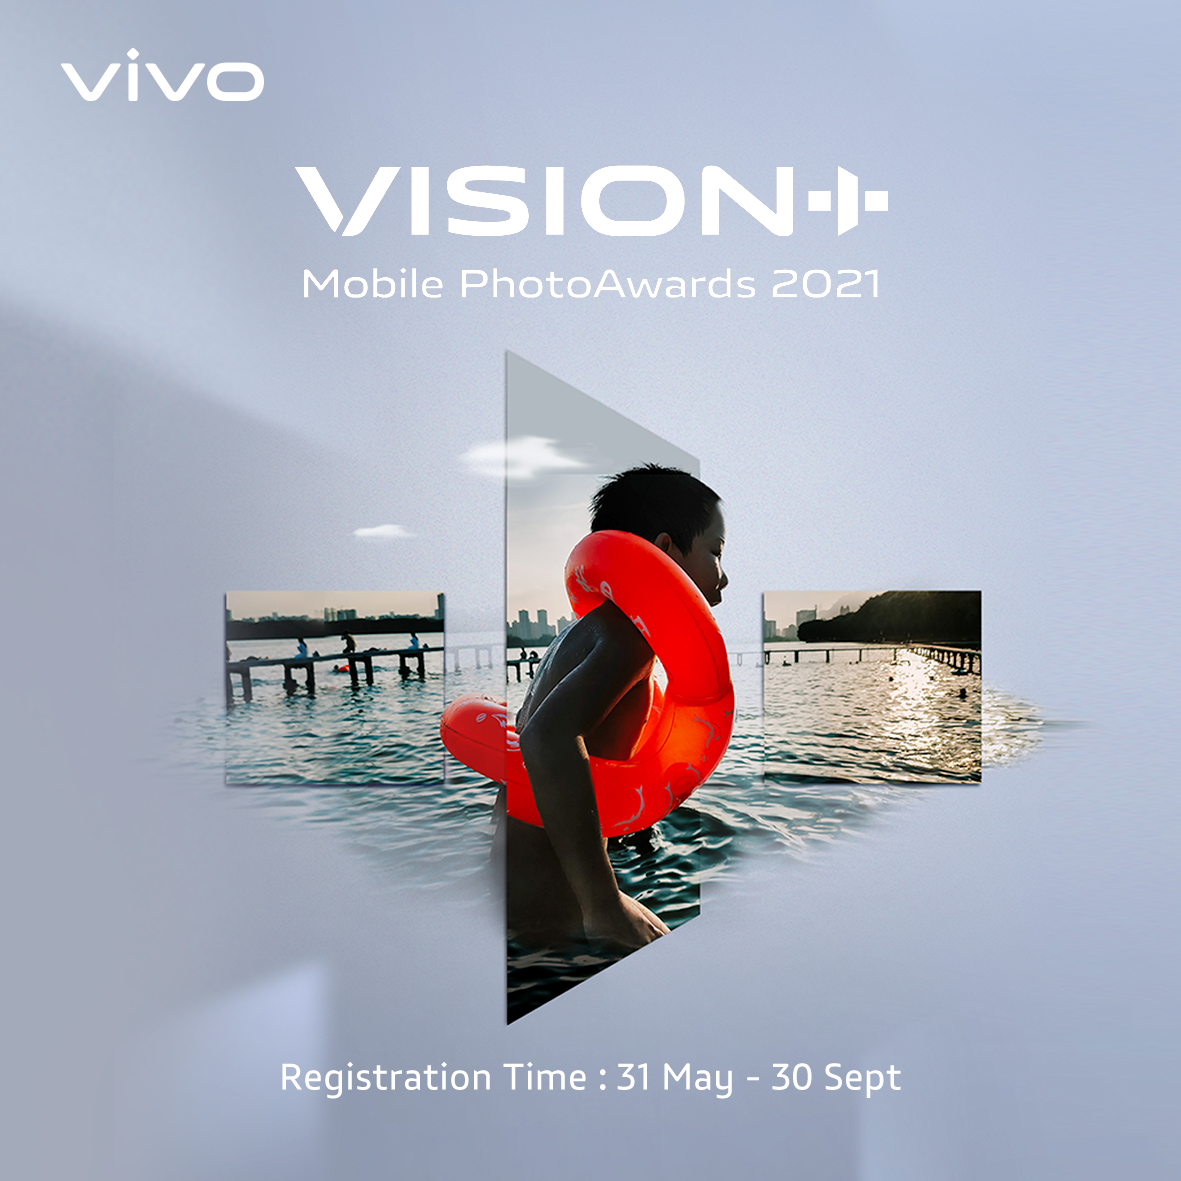 vivo VISION+ 超短片大赛圆满落幕， vivo 影像旗舰实力再次得到验证！ 7